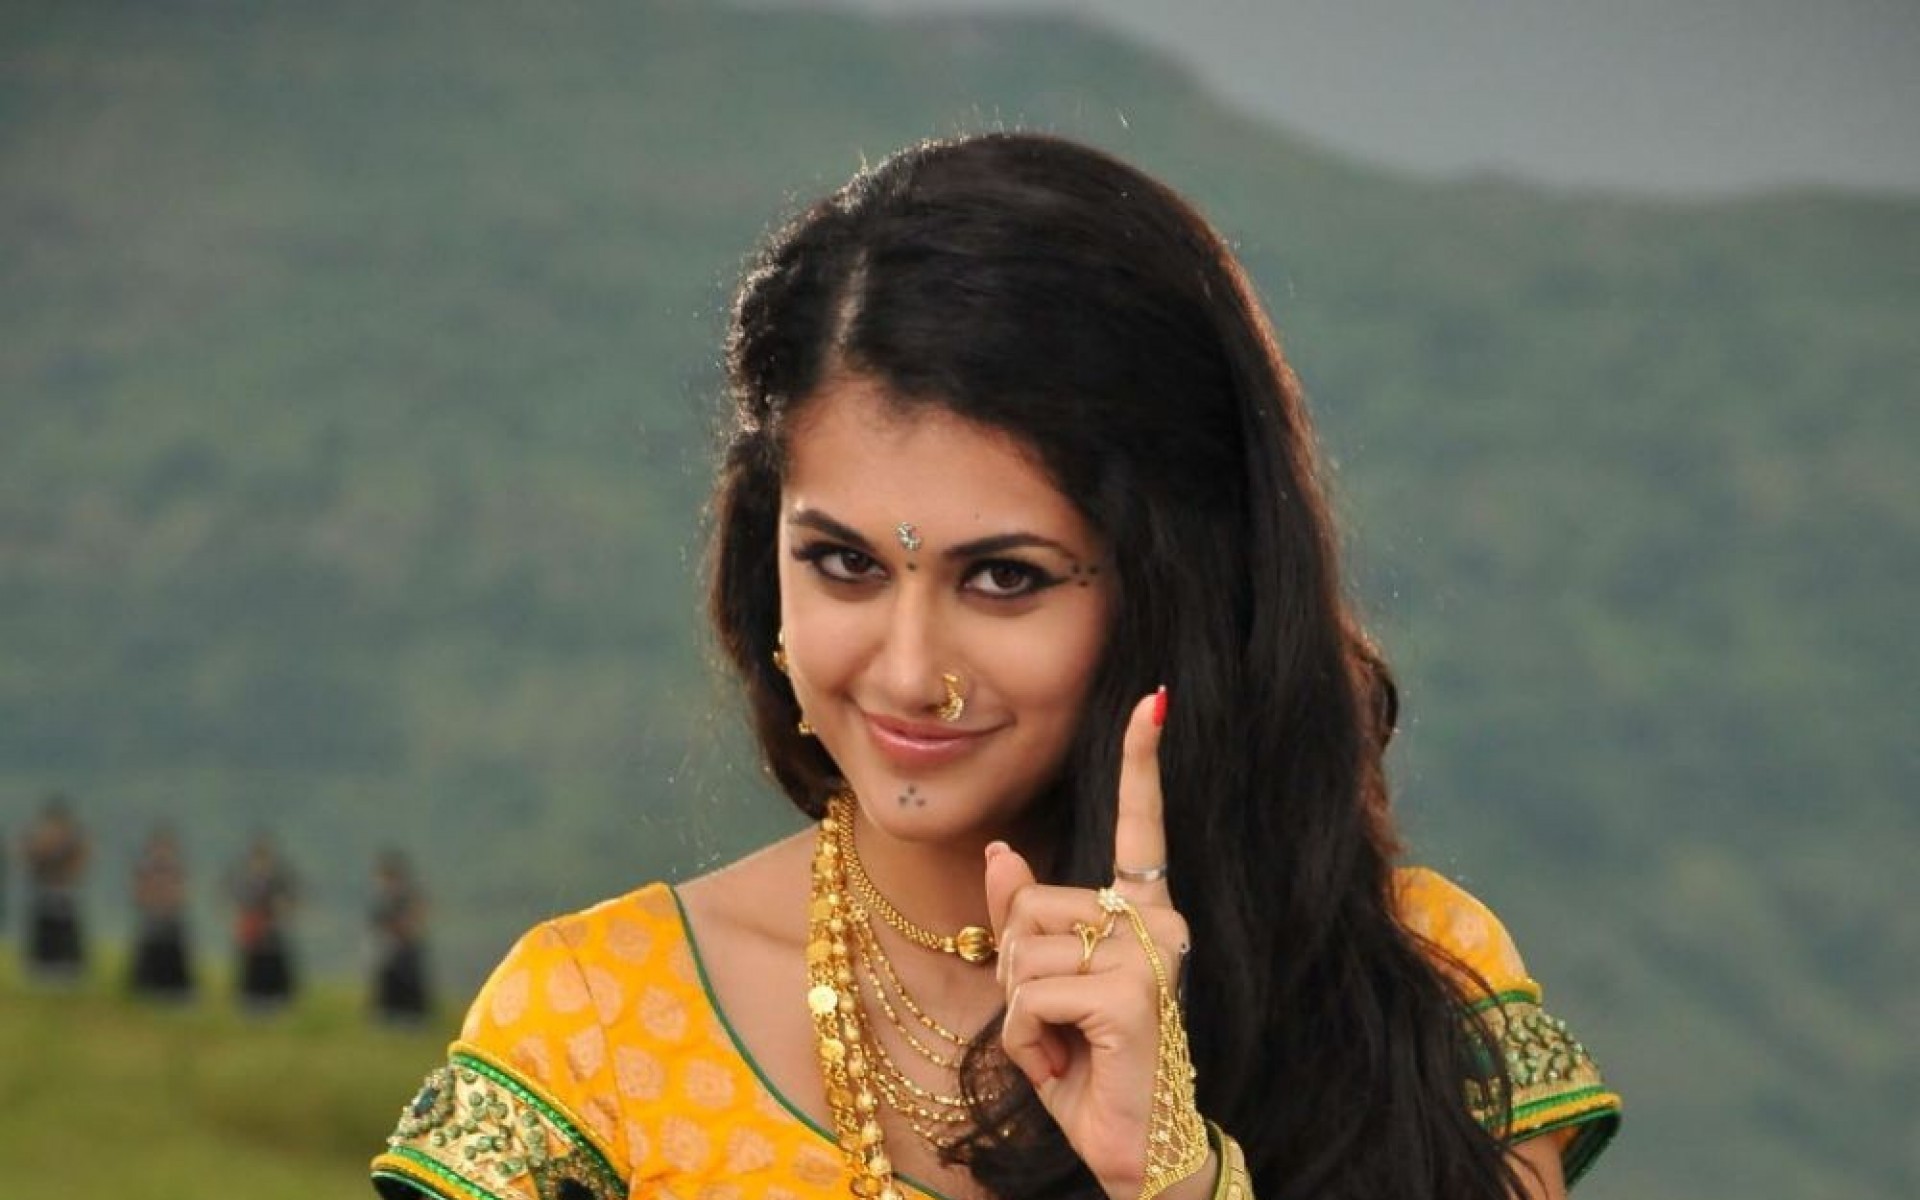 bollywood actress hd wallpapers 1080p free download,photography,black hair,smile,abdomen,sari